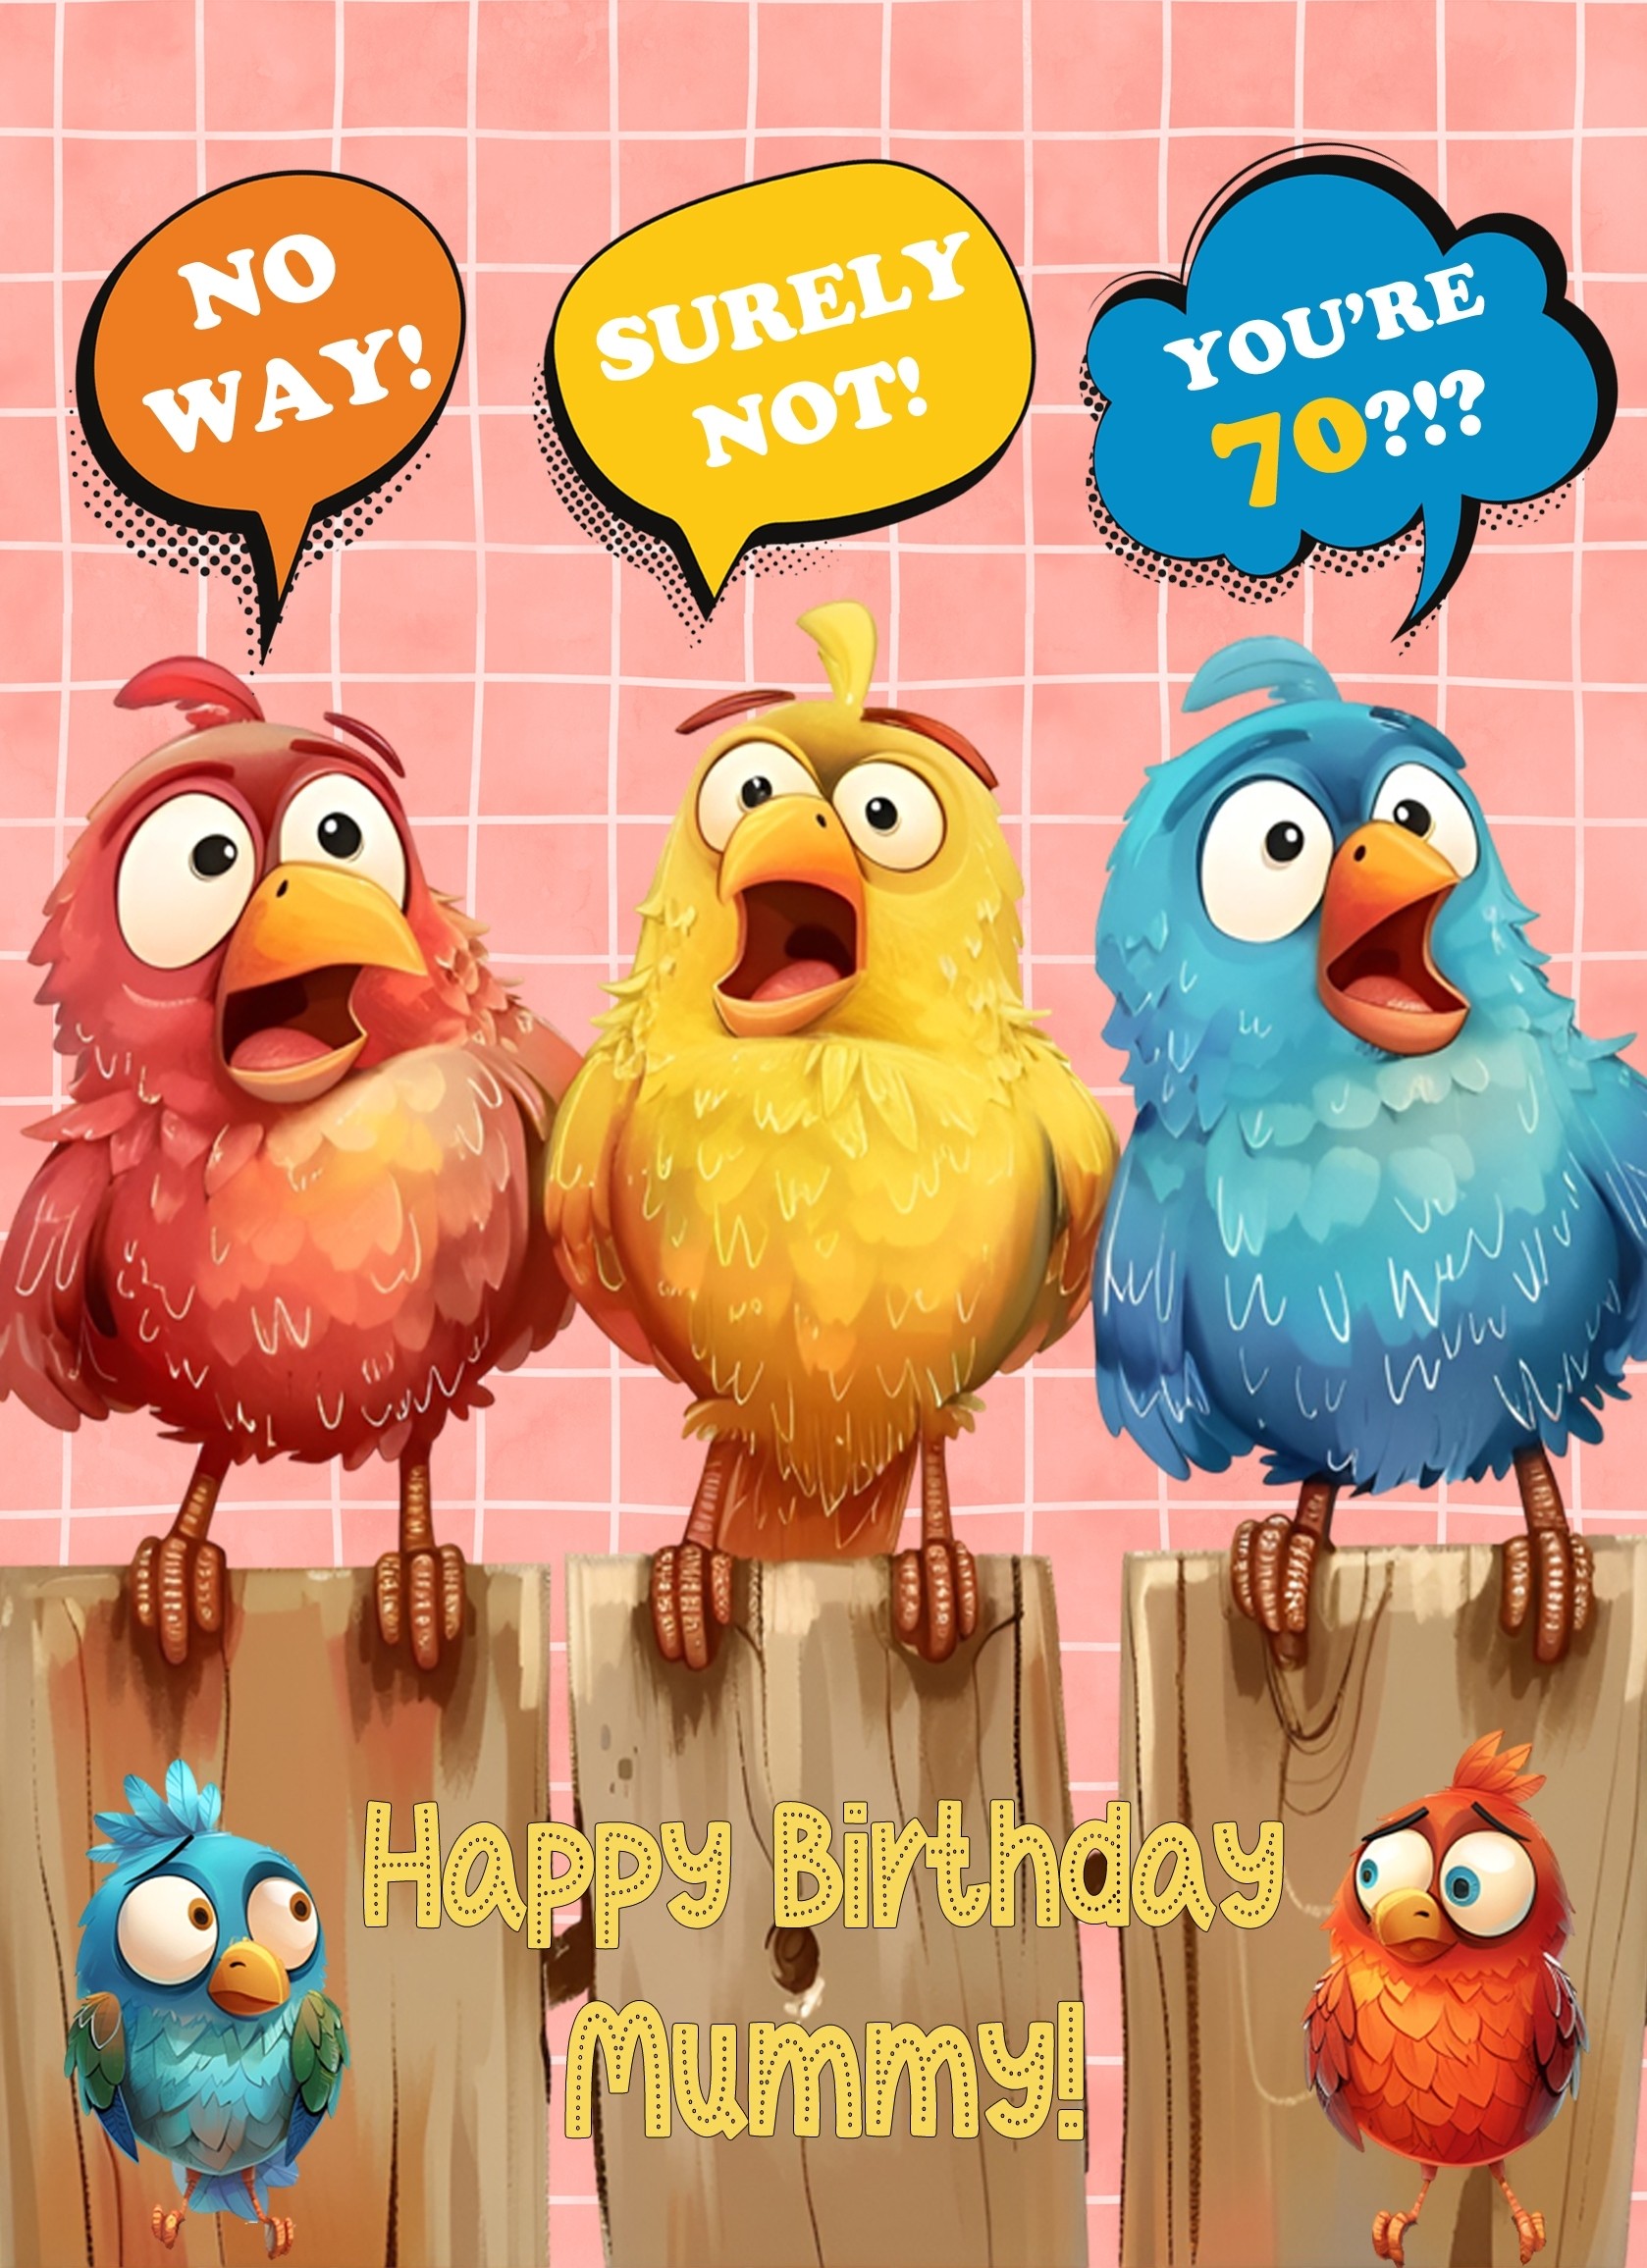 Mummy 70th Birthday Card (Funny Birds Surprised)